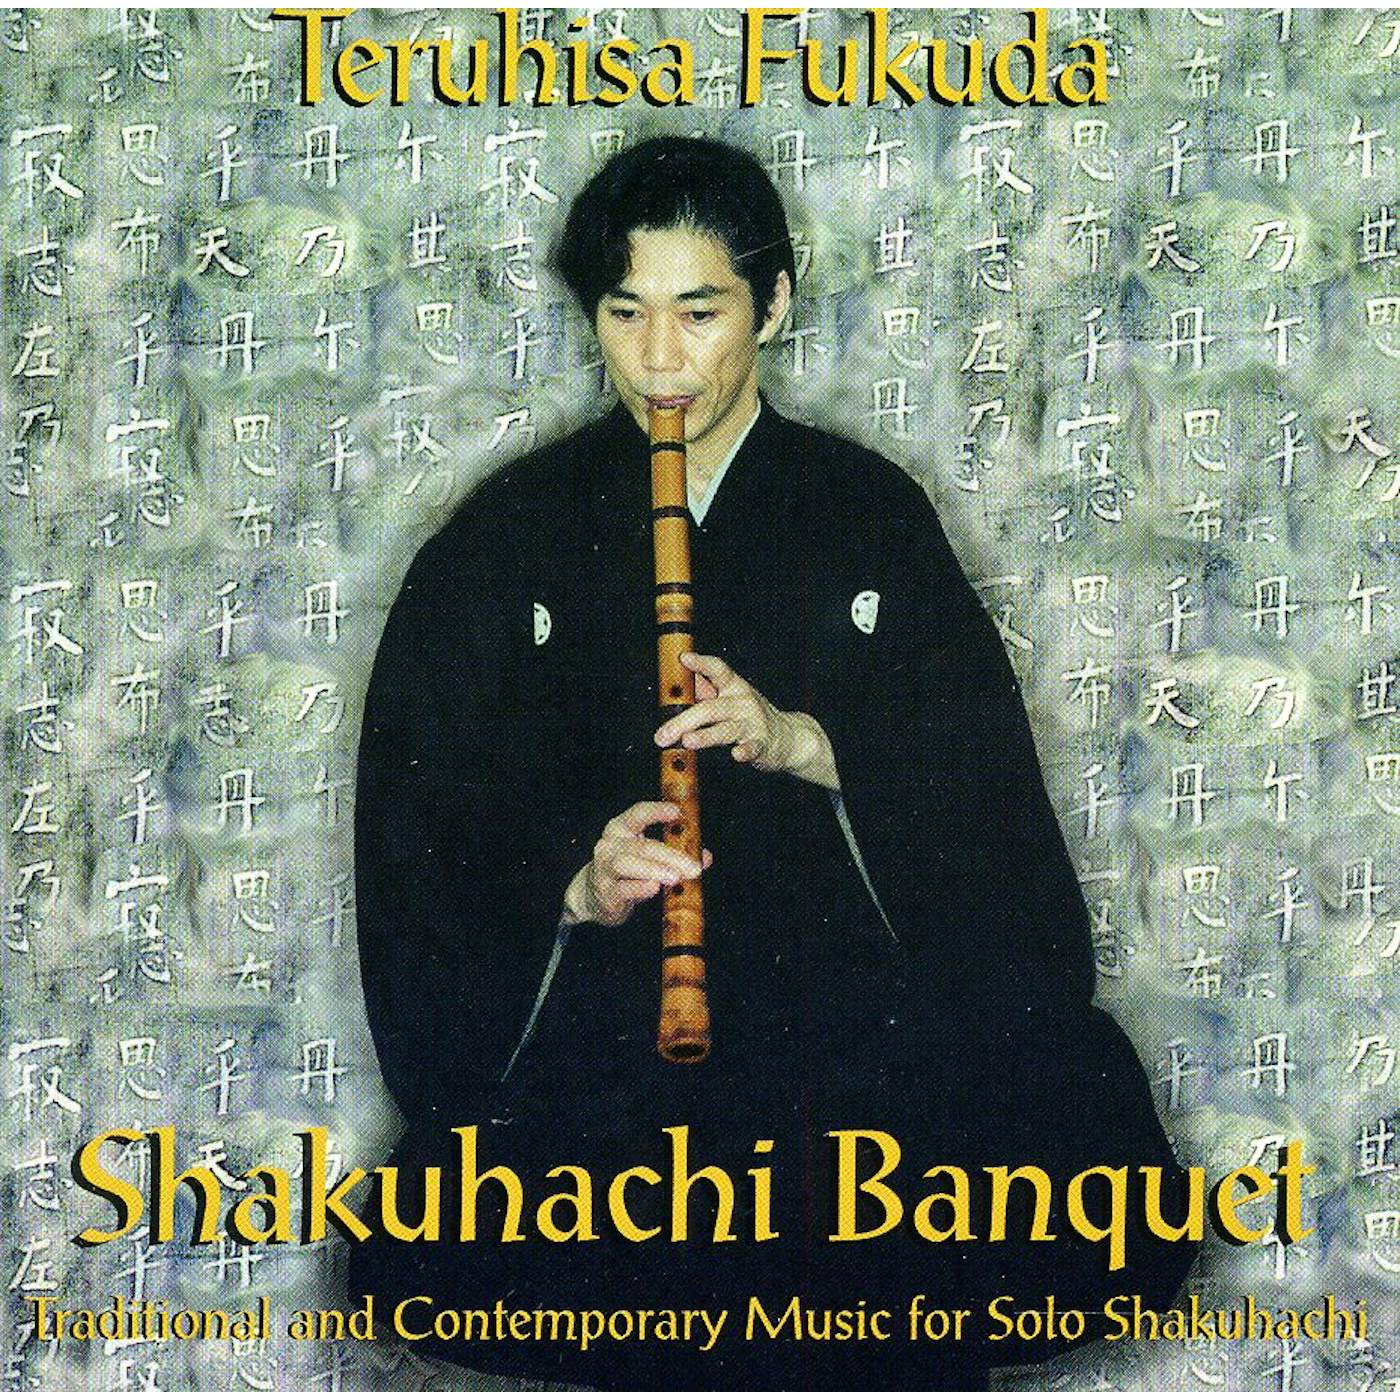 Teruhisa Fukuda SHAKUHACHI BANQUET CD